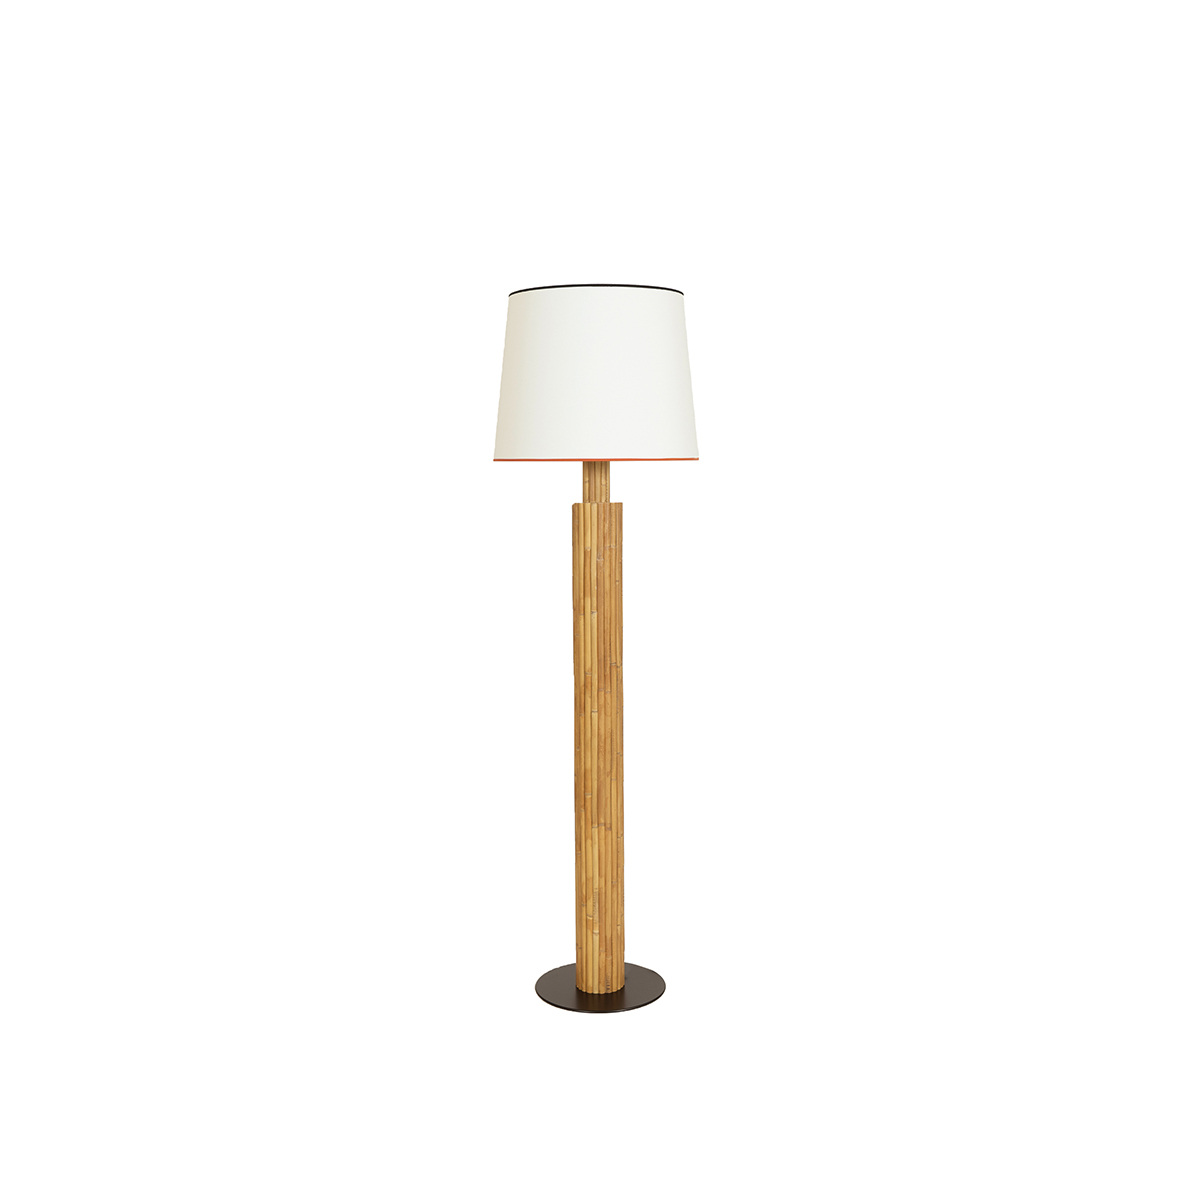 Floor Lamp Riviera, Natural - H155 cm - Wicker / Cotton shade - image 1